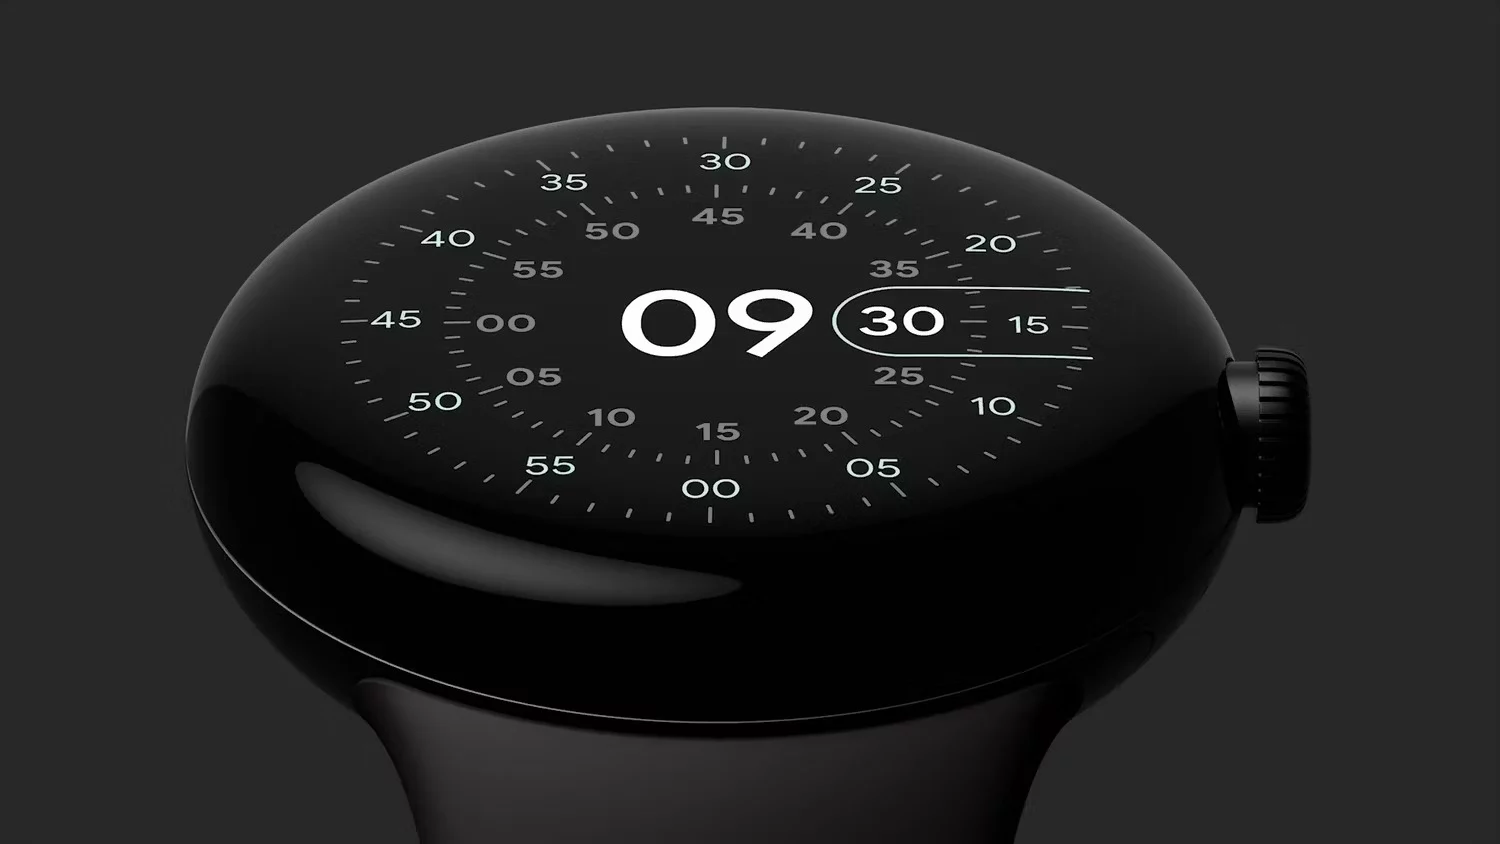 The Design of Google Pixel Watch